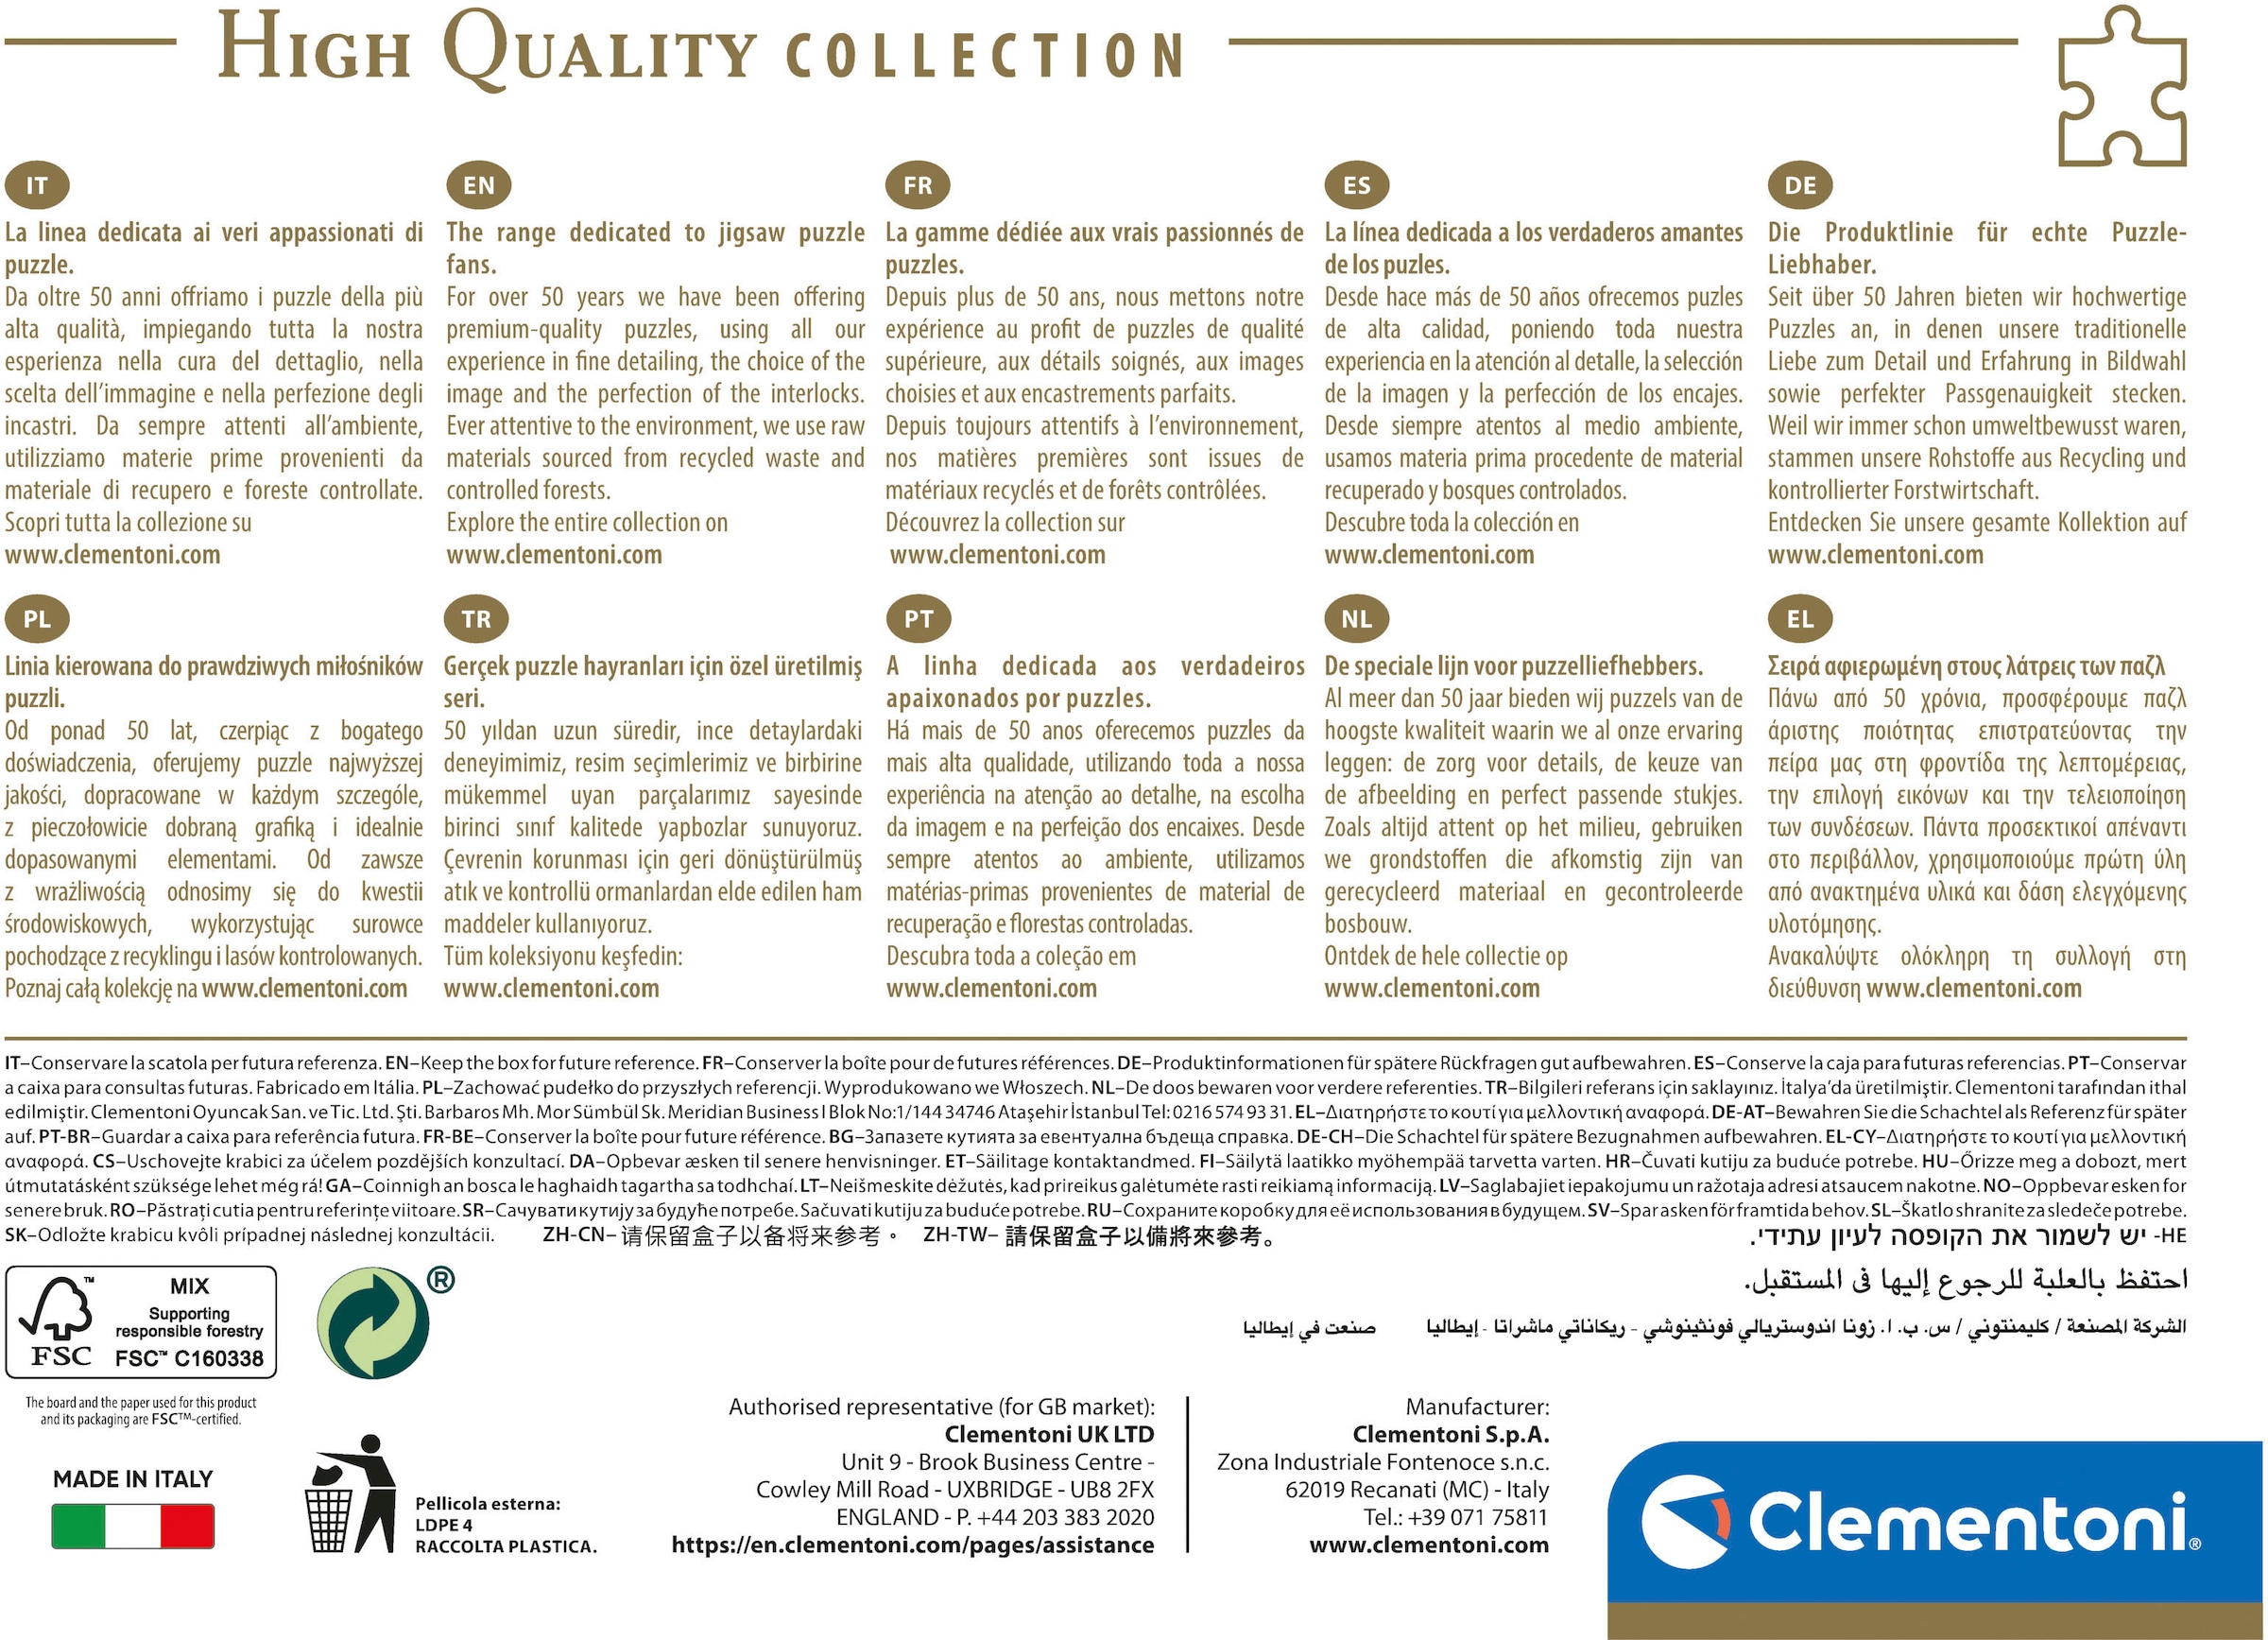 Clementoni® Puzzle »High Quality Collection Compact, Antike Karte, mit neuer Compact Box«, Made in Europe; FSC® - schützt Wald - weltweit